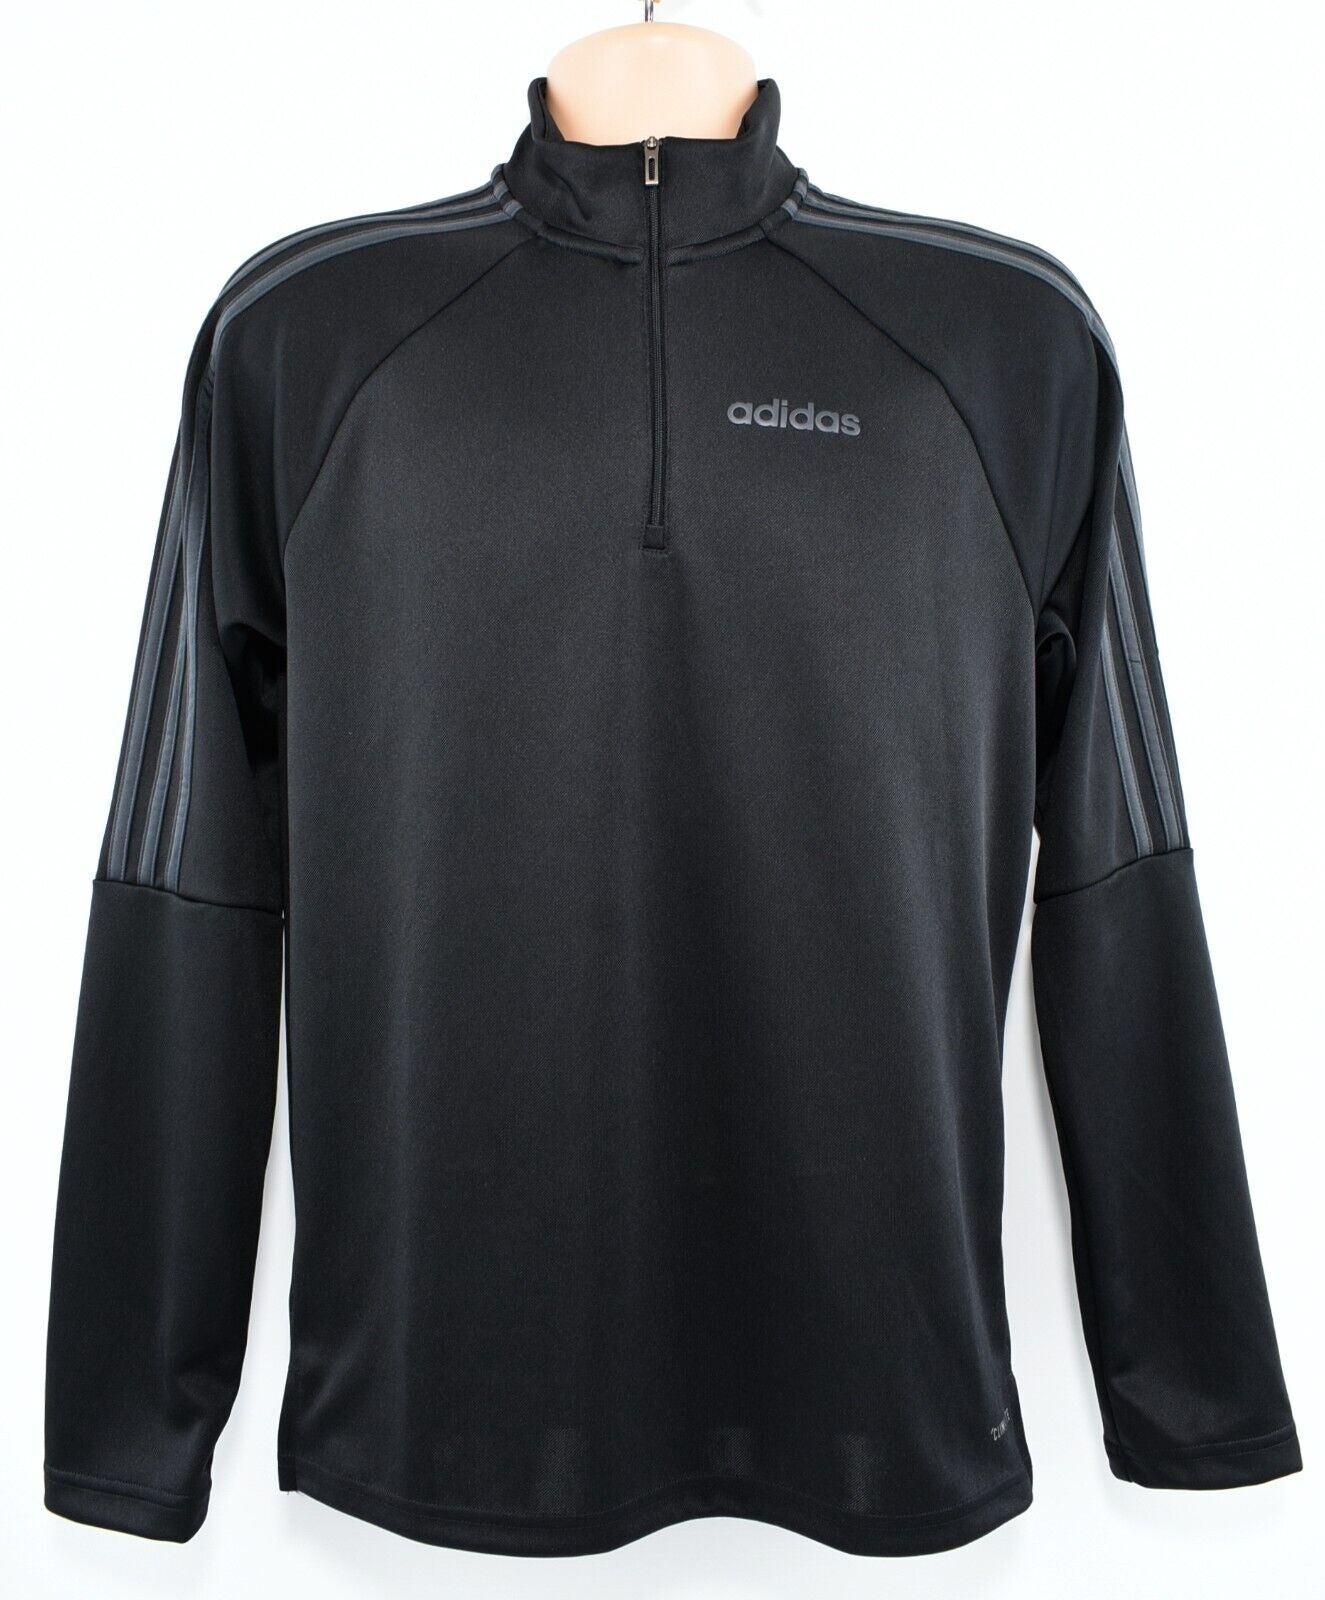 ADIDAS Men's SERENO 19 1/4 Zip Neck Long Sleeve Training Top, Black/Grey, size S